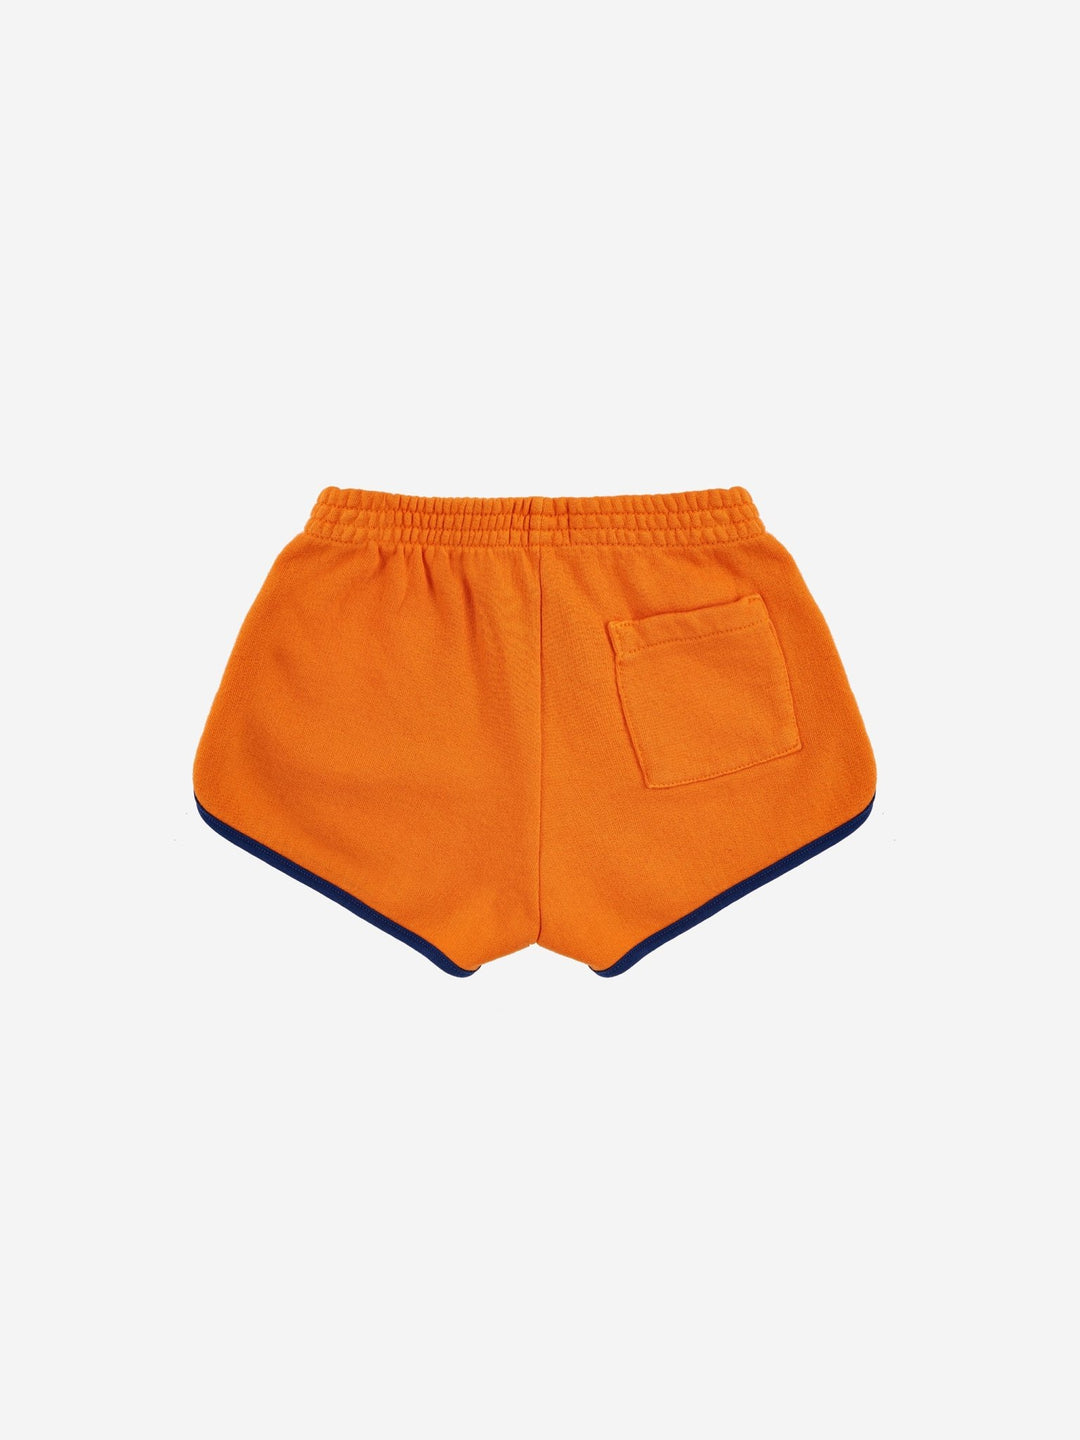 BC Orange Shorts - Orange - Posh New York